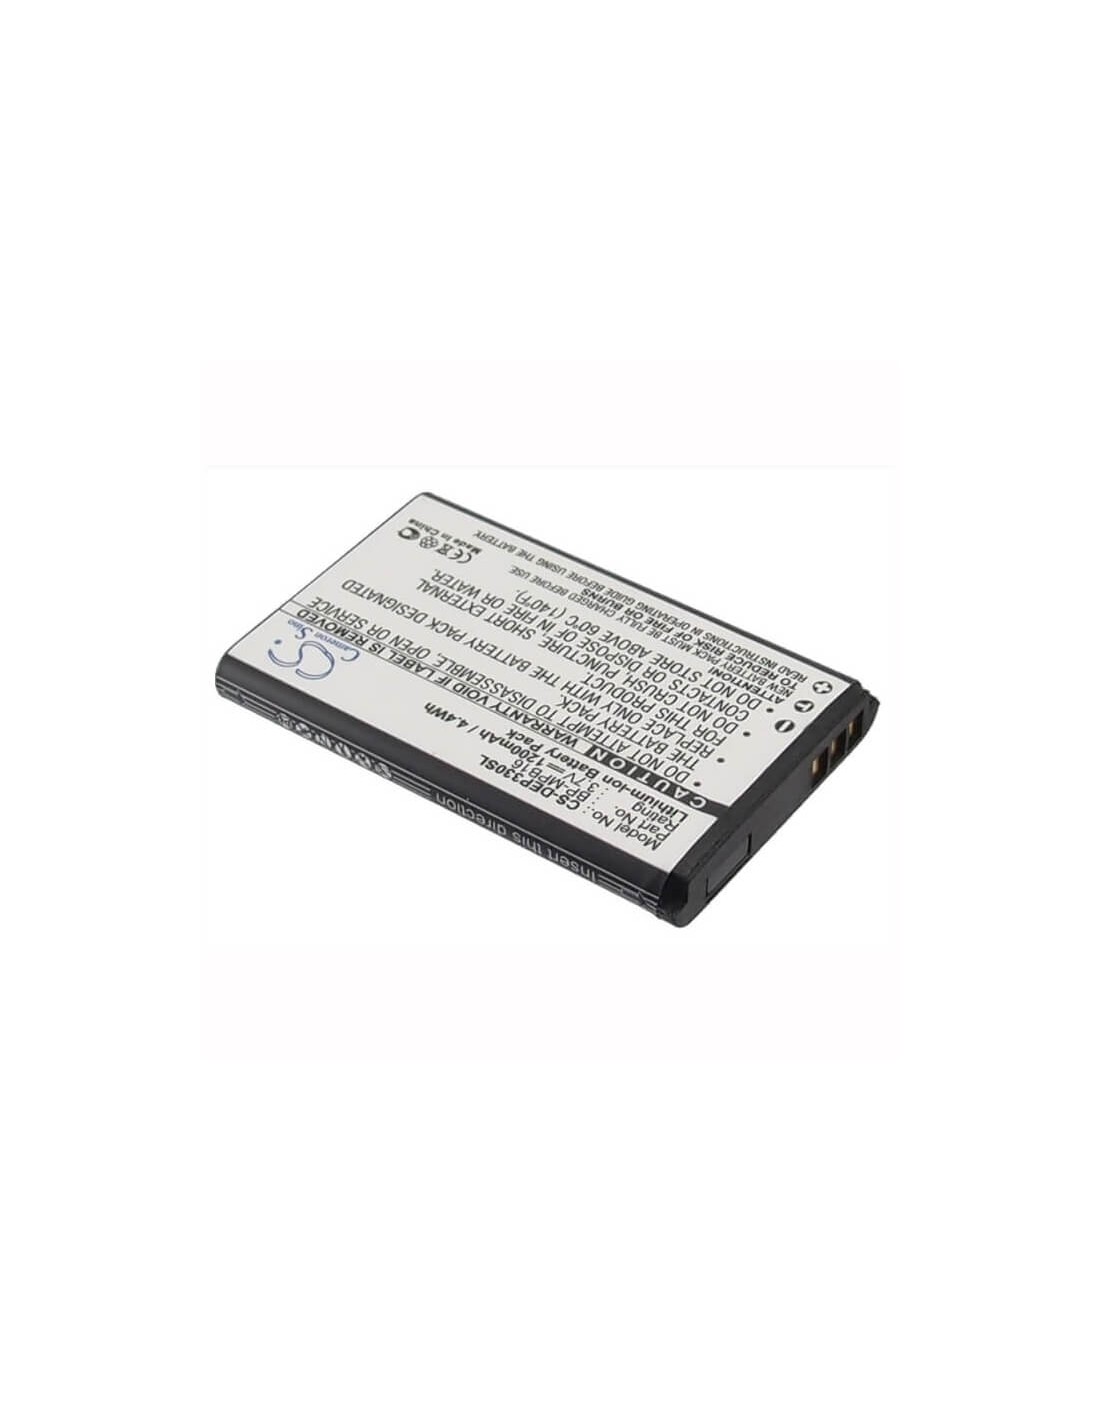 Battery for DORO 330gsm, HandleEasy 330, HandleEasy 330gsm 3.7V, 1200mAh - 4.44Wh